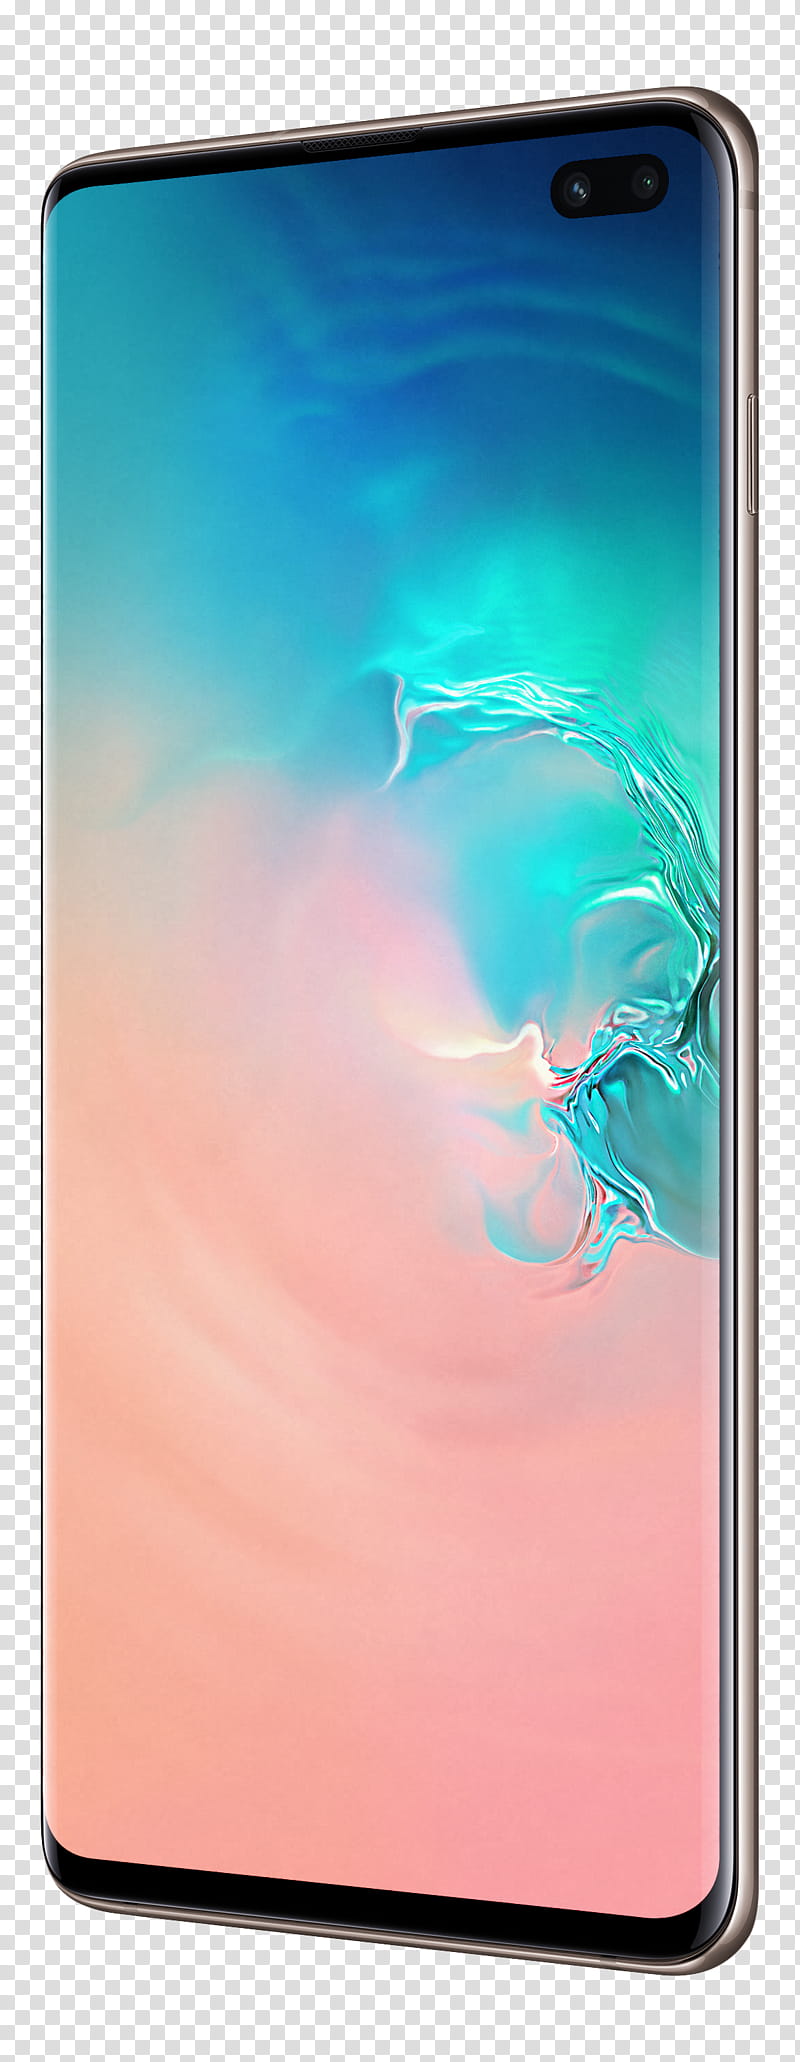 Samsung Galaxy Note 8 Samsung Galaxy S10+ Samsung Galaxy S9, Smartphone, Unlocked, Dual SIM, 128 Gb, Mobile Phones, Water, Aqua transparent background PNG clipart